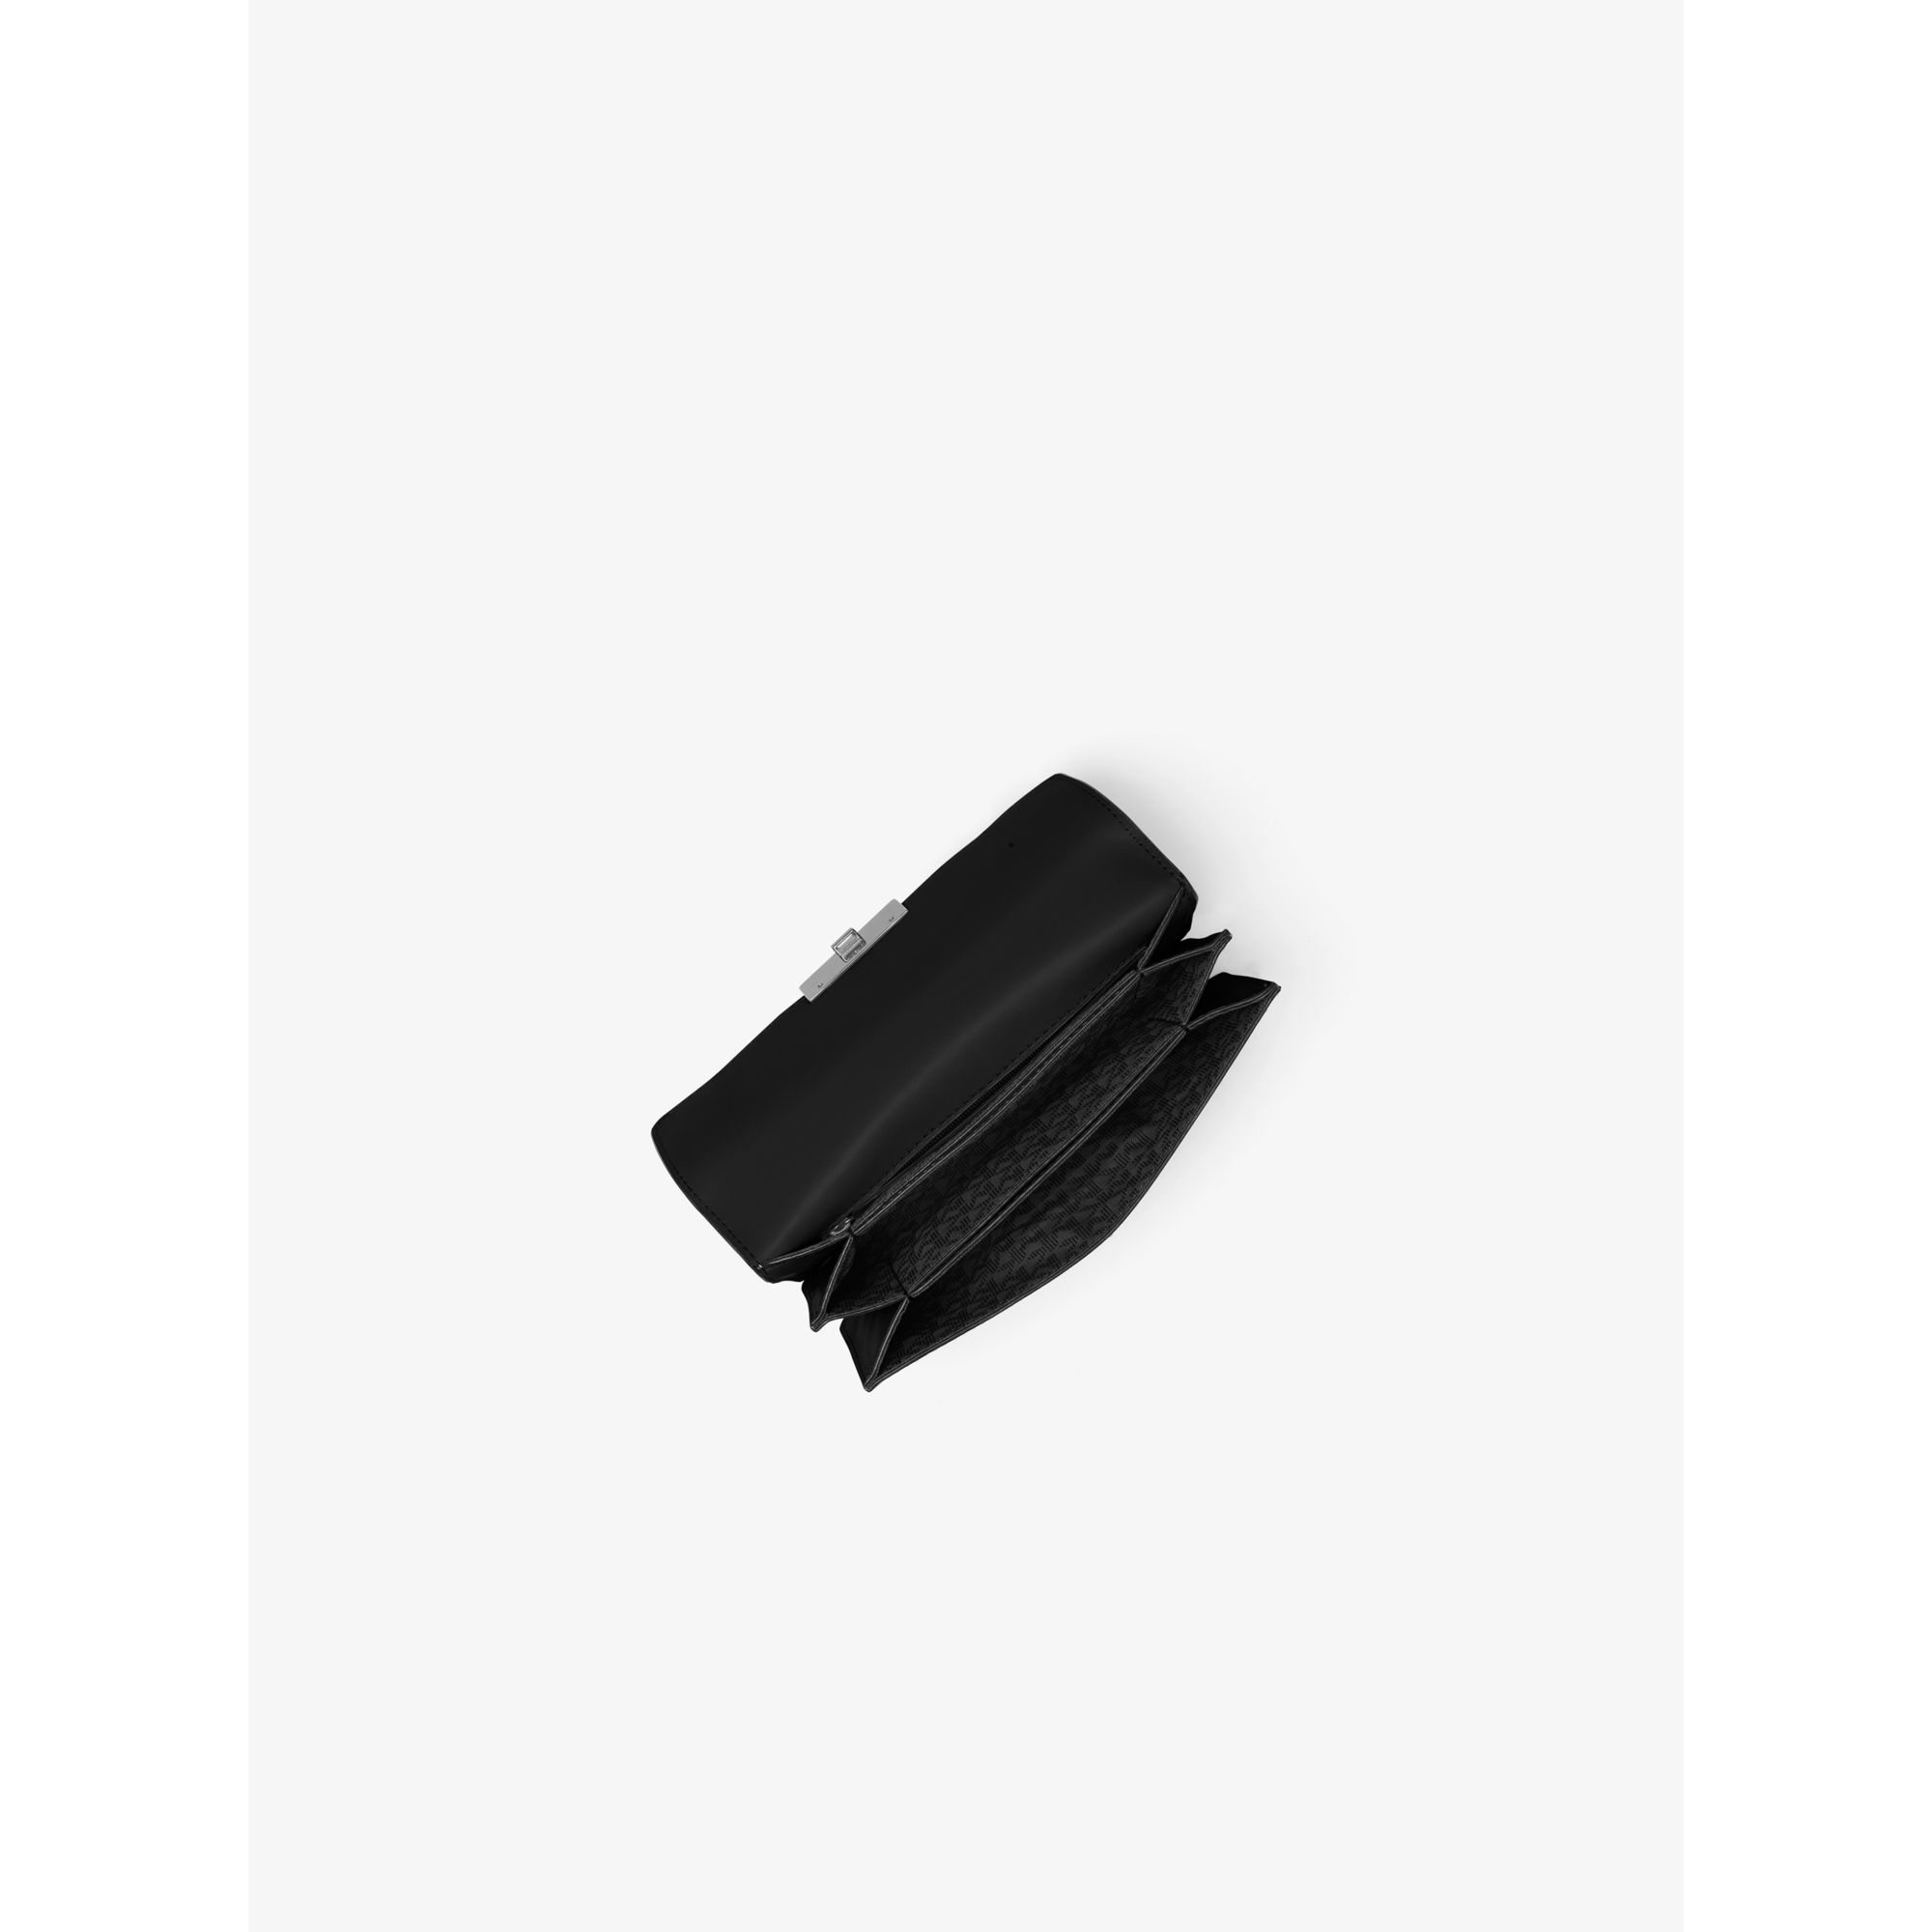 Michael Kors Sloan Small Studded Leather Crossbody Bag in Black - Lyst